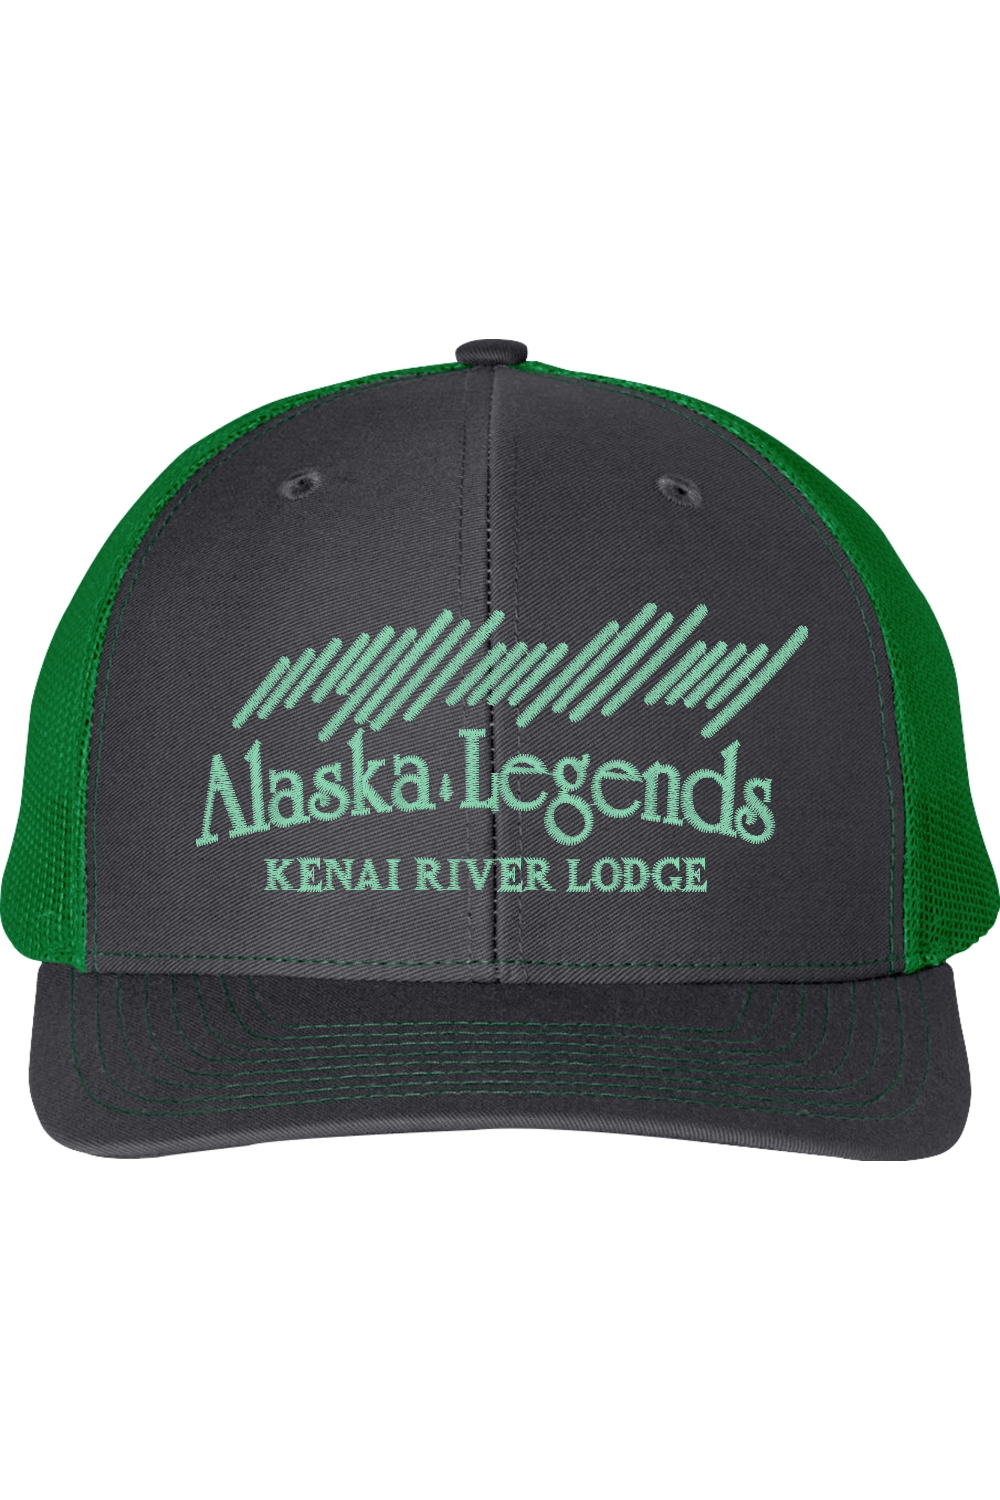 Alaska Legends Kenai River Lodge Snapback Trucker Hat